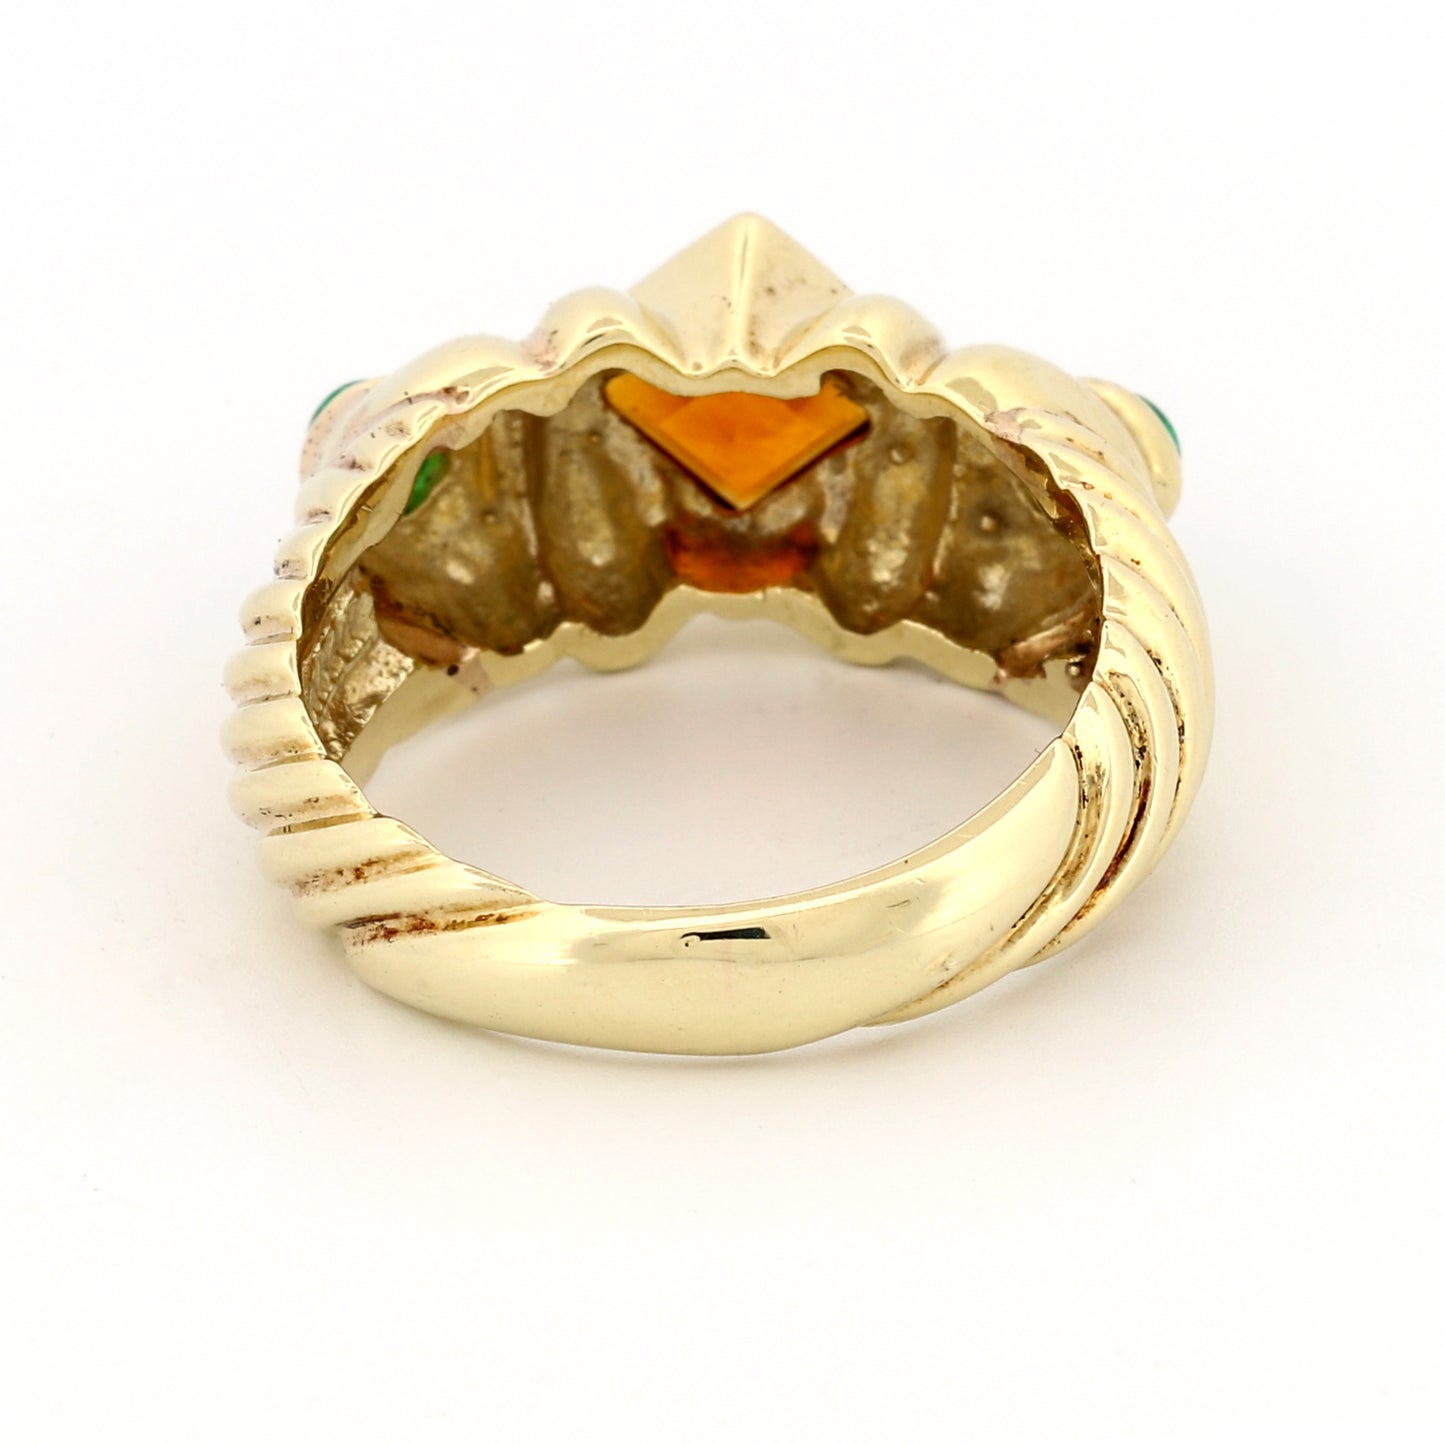 David Yurman Vintage Renaissance Ring in 14k Gold with Citrine & Emerald